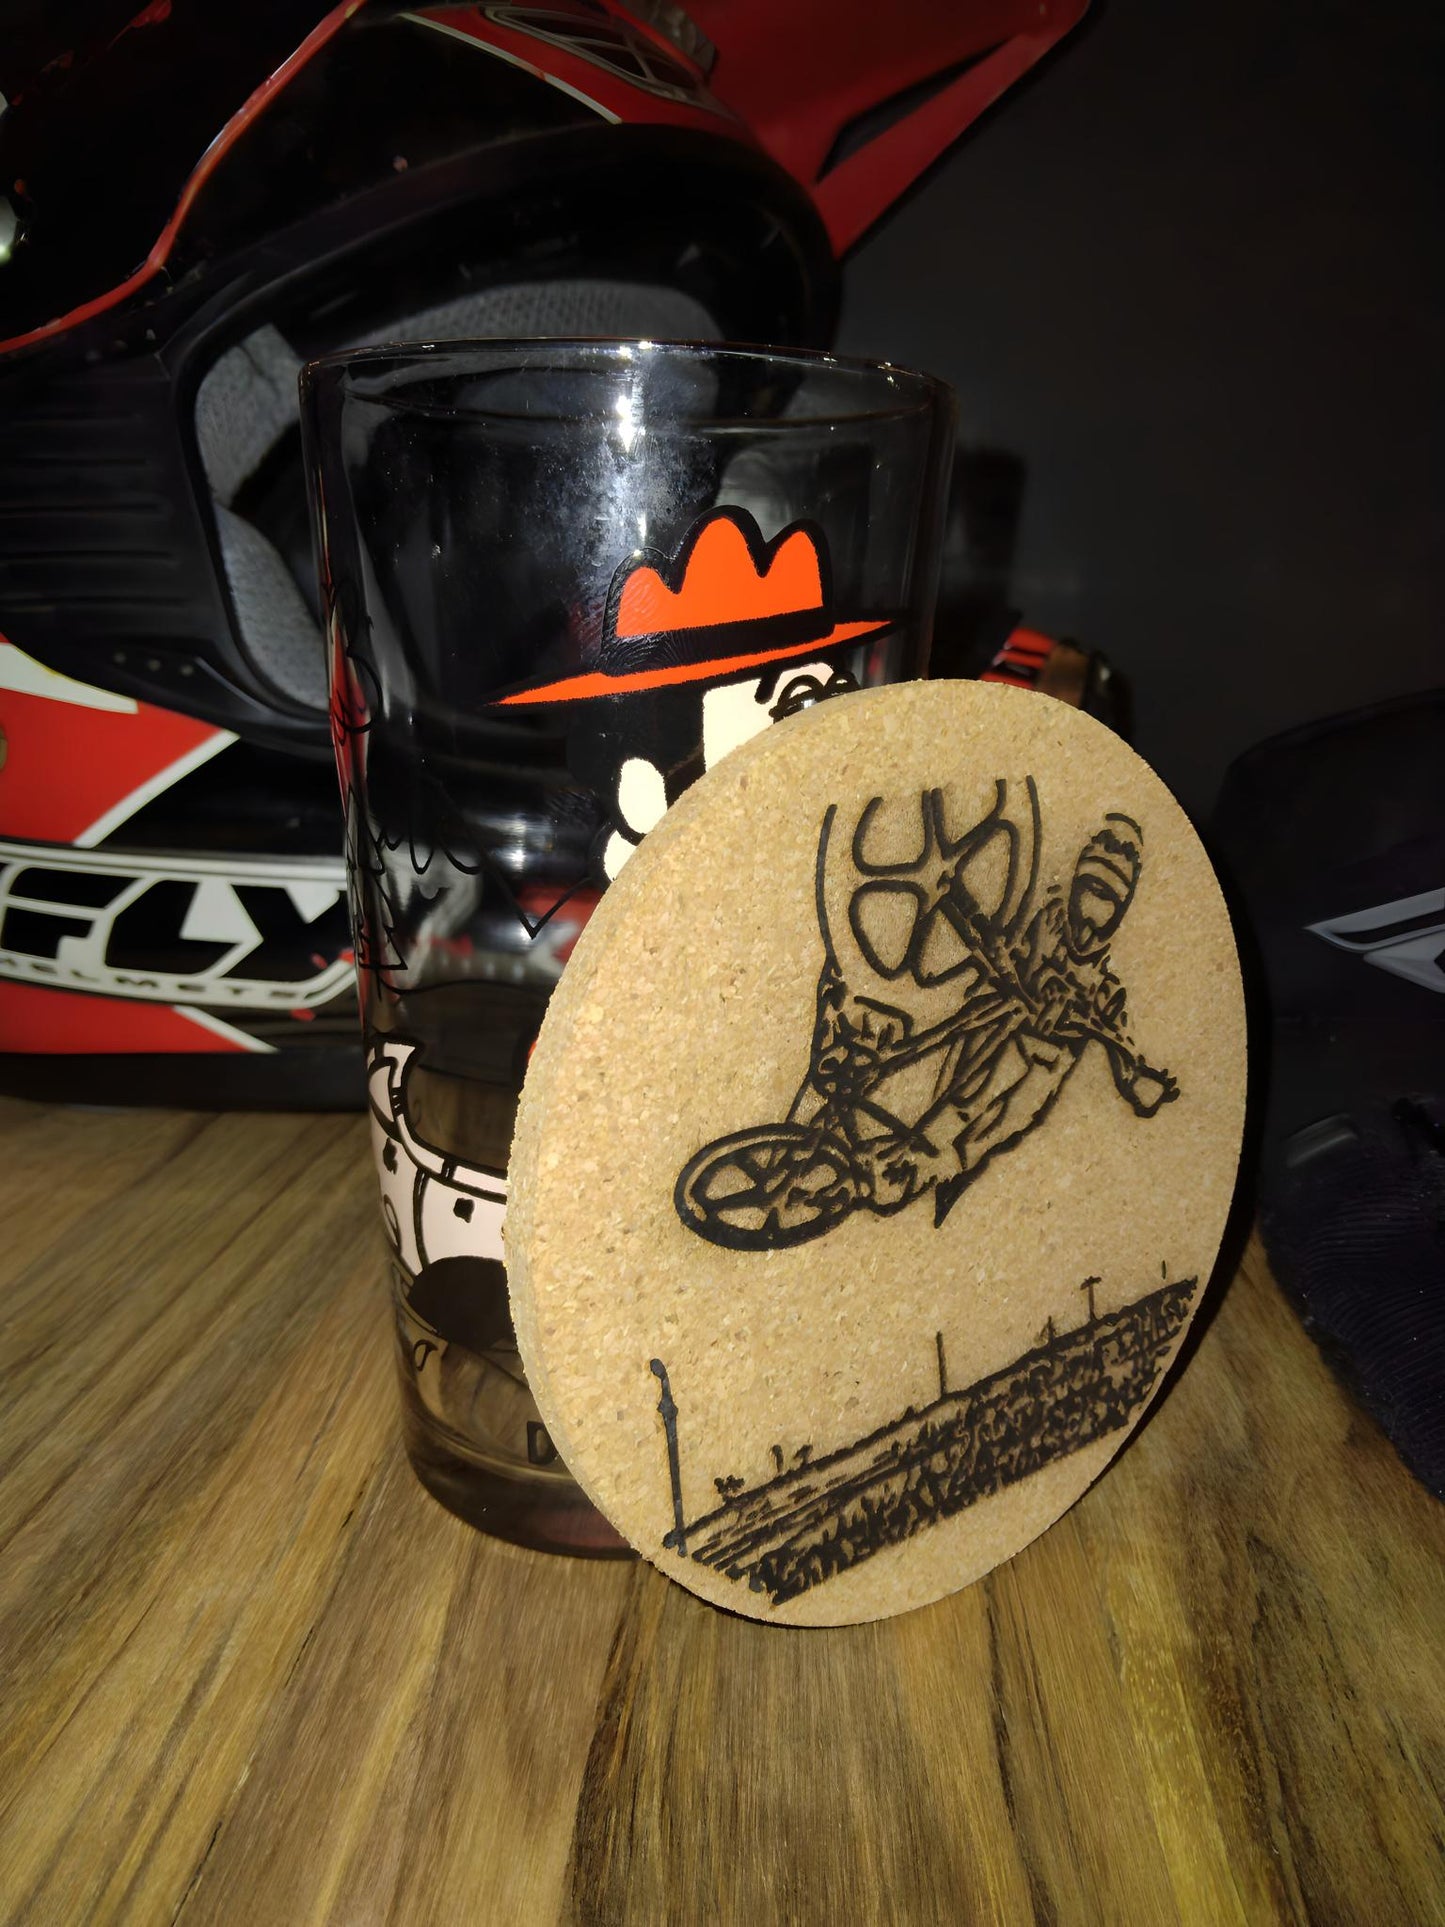 Freestyle BMX Artwork Coaster - Left